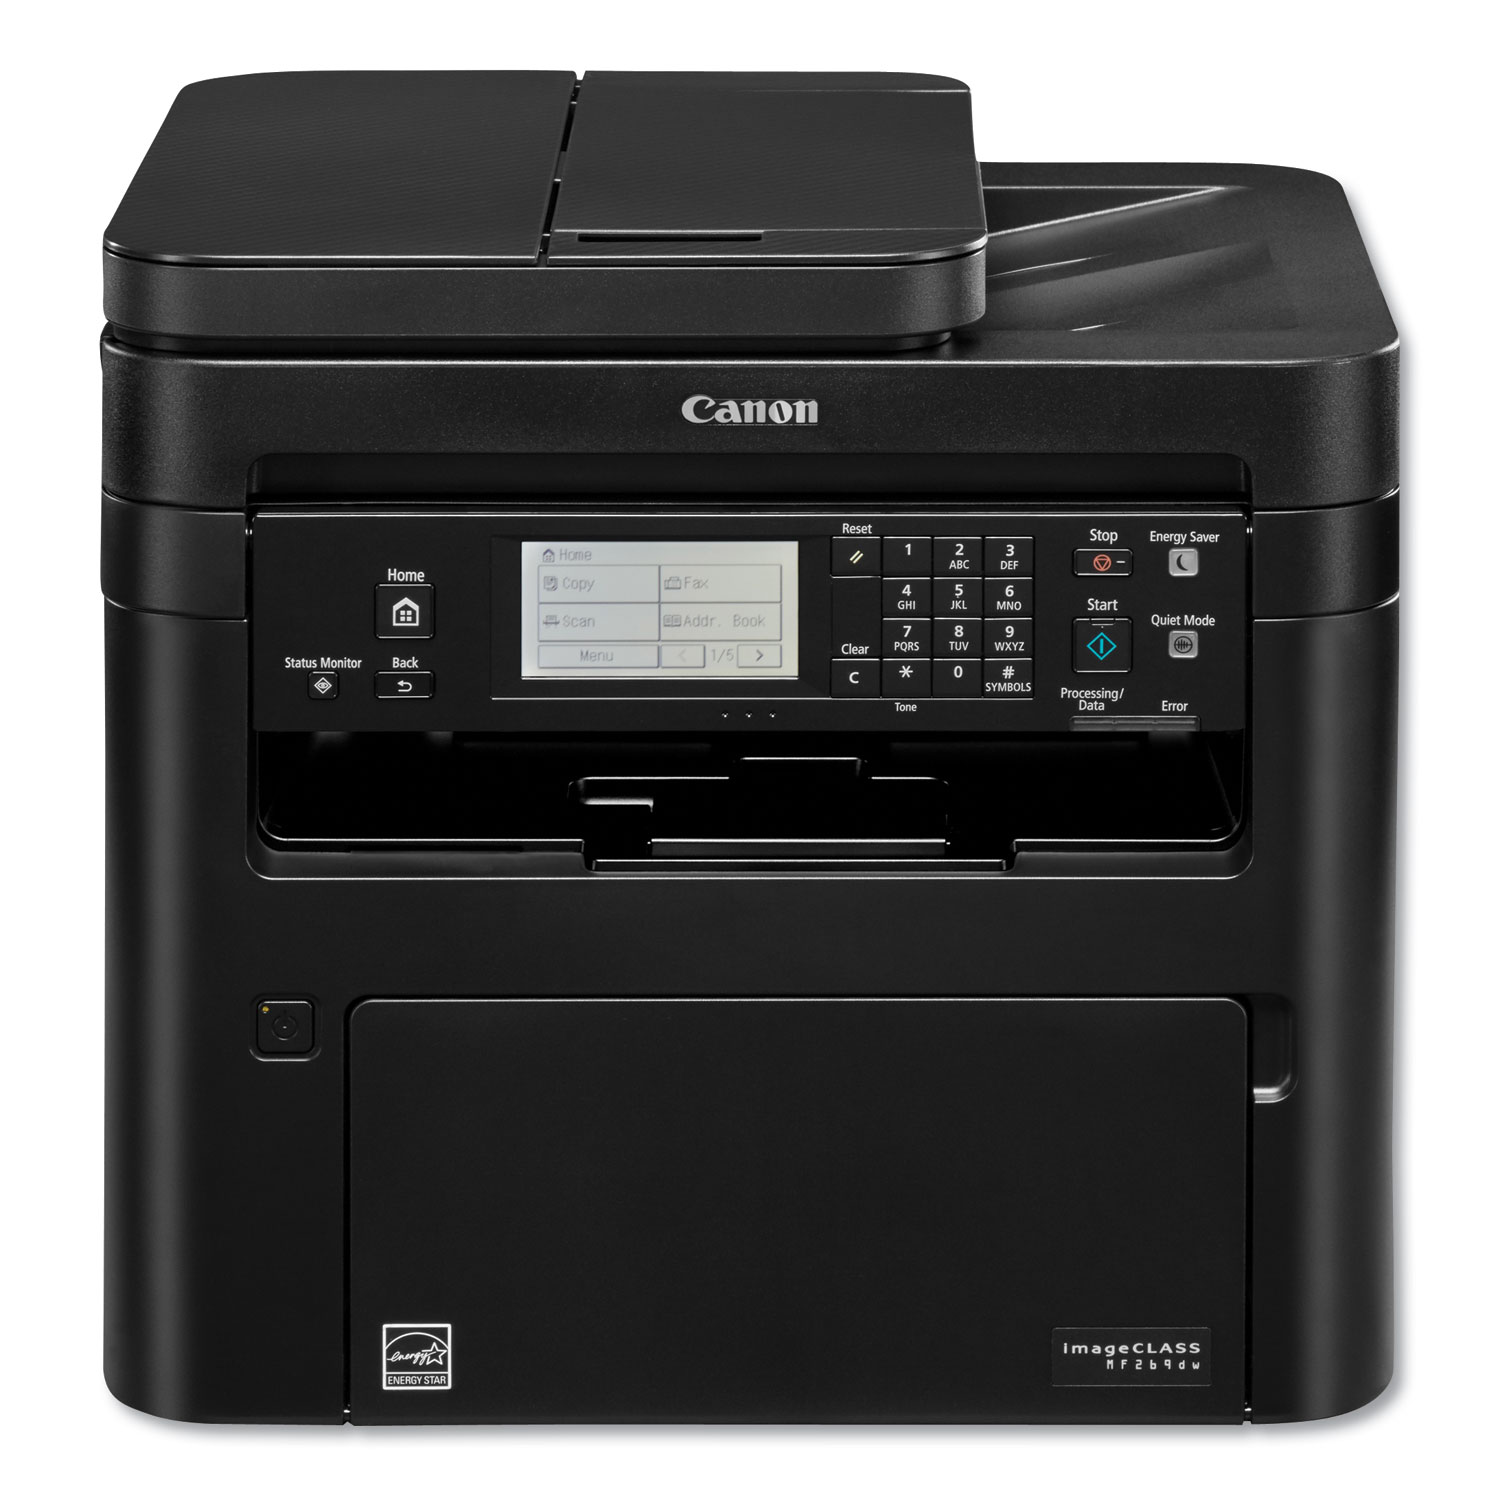  Canon 2925C006 imageCLASS MF269dw Wireless All-in-One Laser Printer, Copy/Fax/Print/Scan (CNM2925C006) 